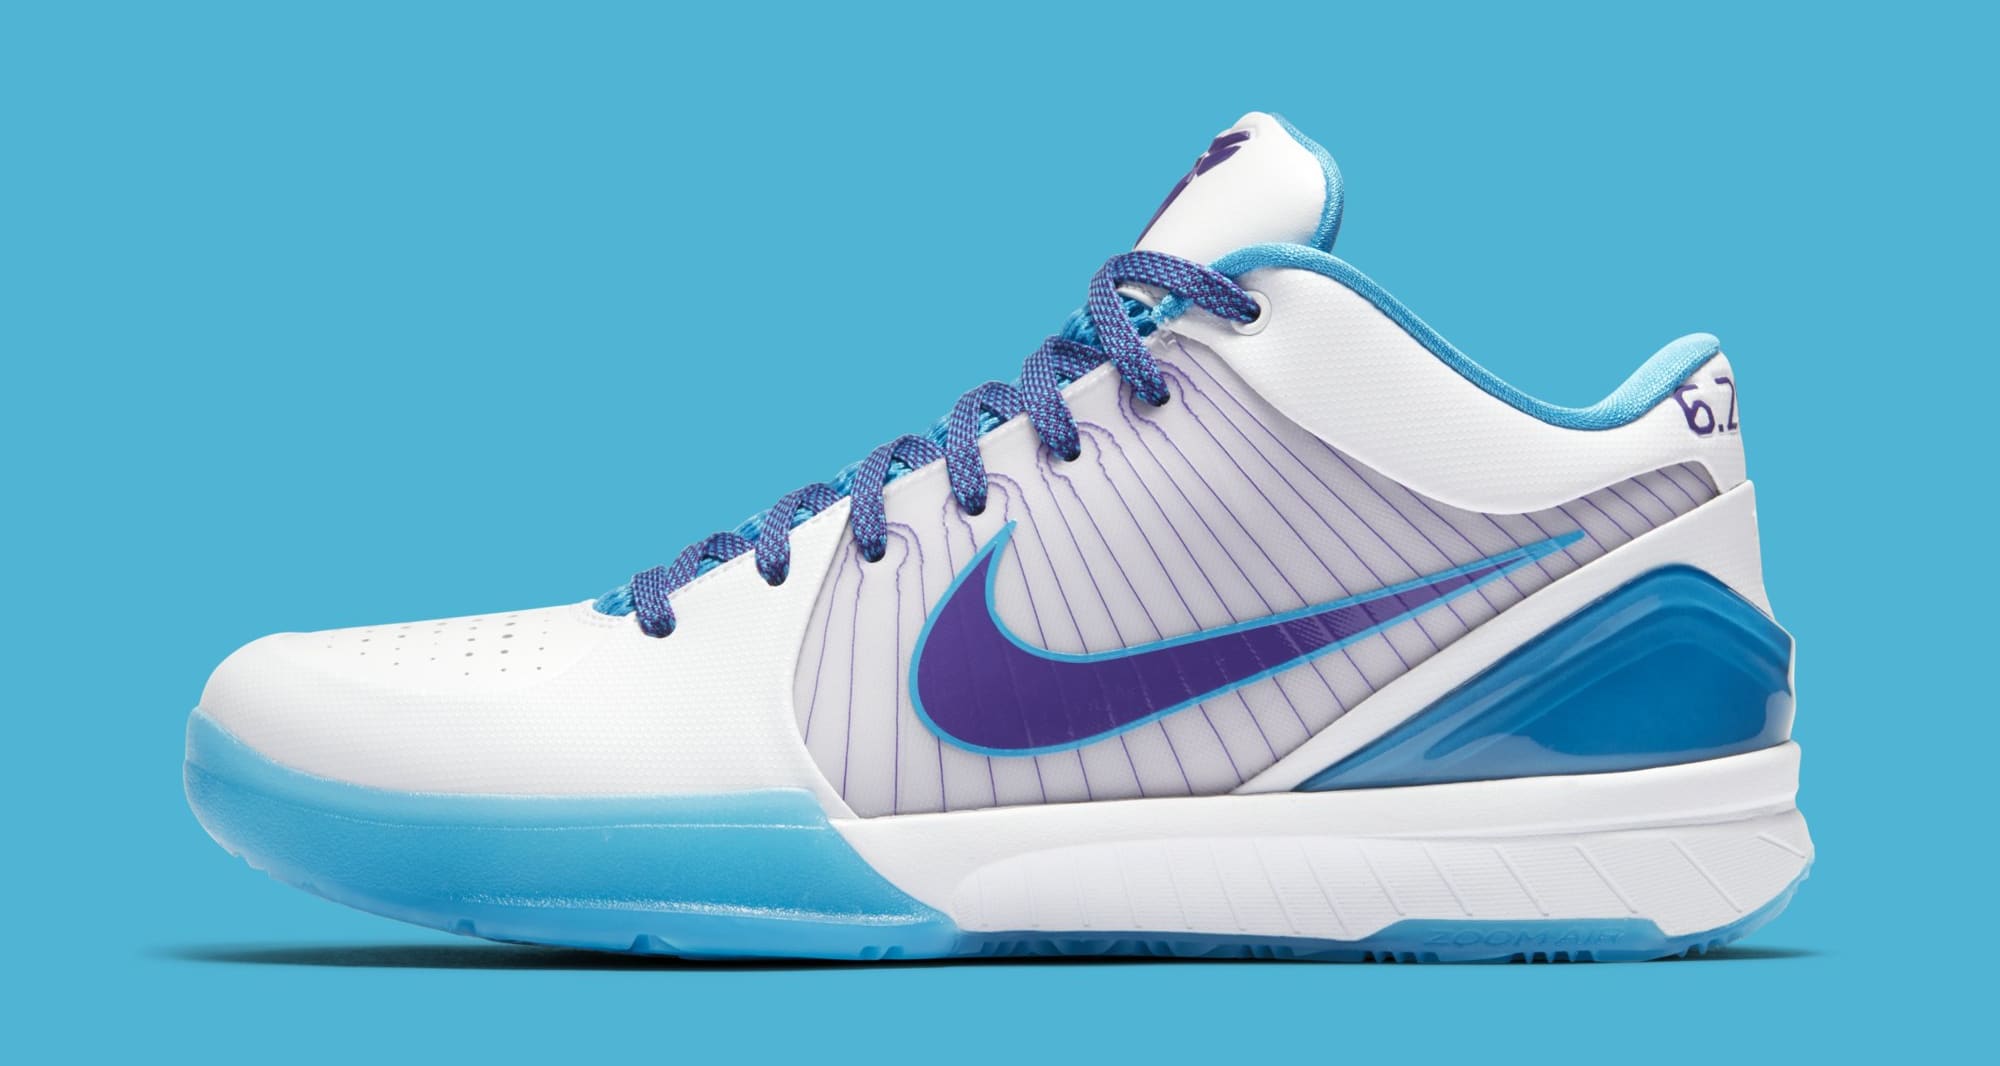 Nike Kobe Blue | vlr.eng.br